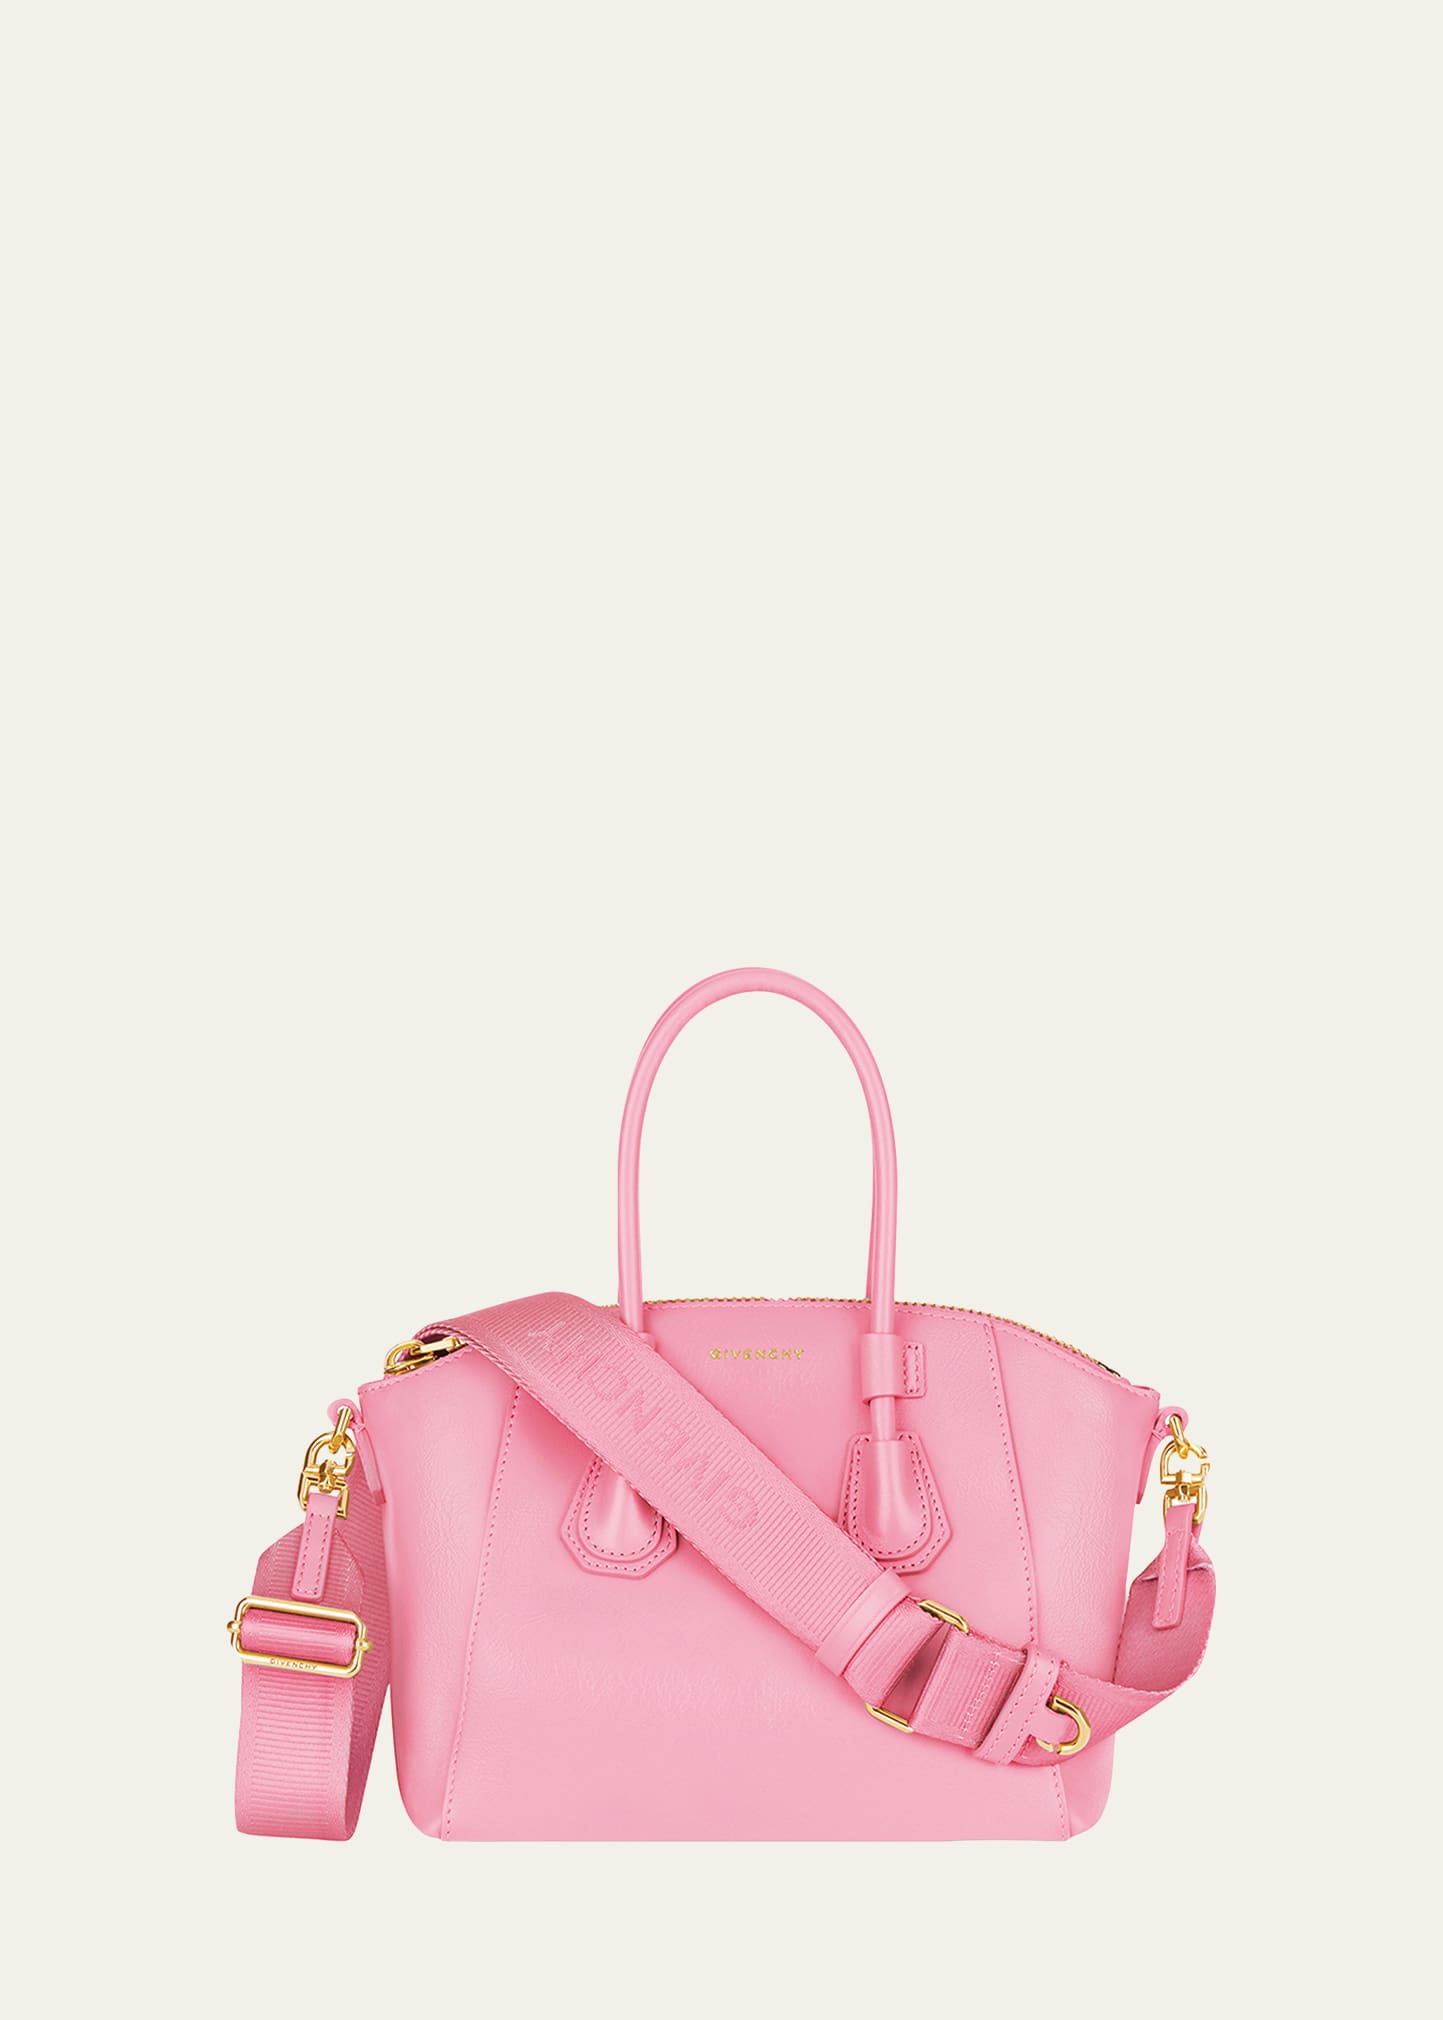 Givenchy Light Pink Leather Mini Antigona Satchel Givenchy